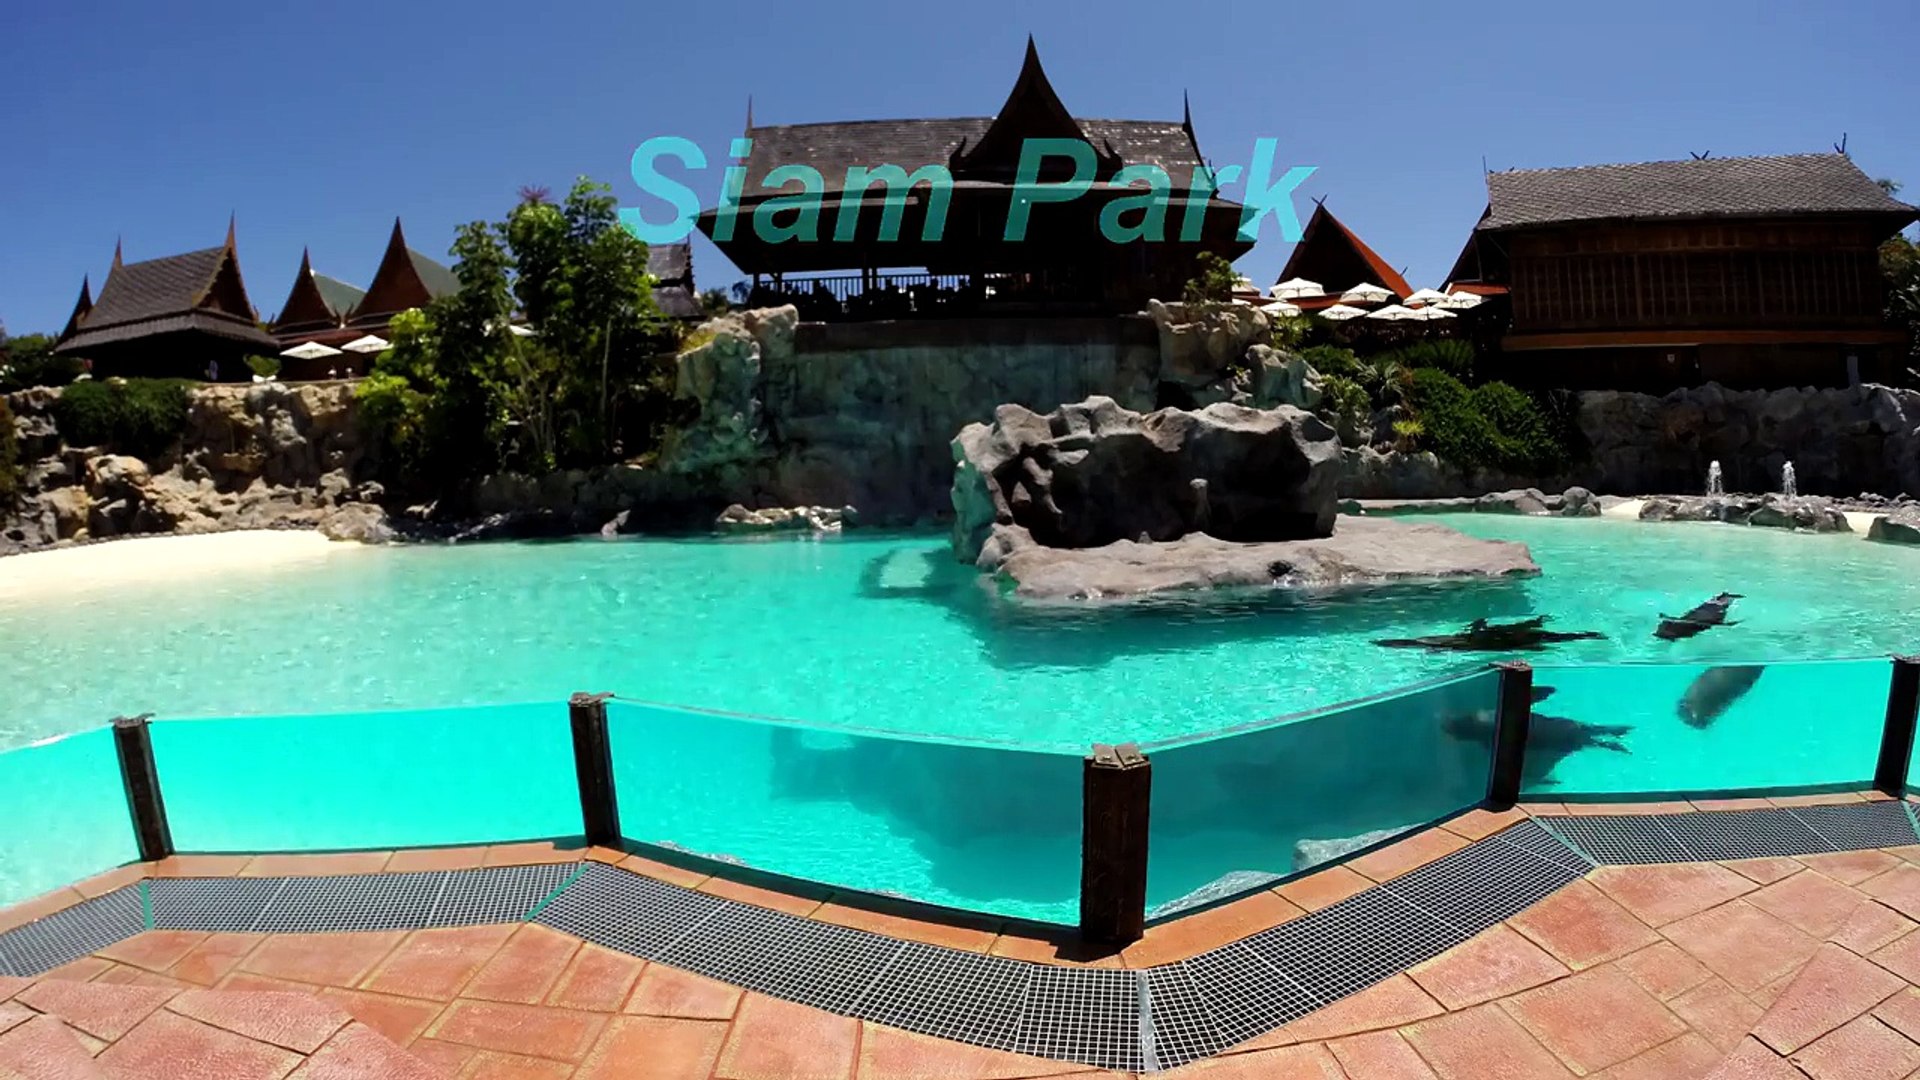 Tenerife (Siam Park) - Timelapse 4K Ultra HD